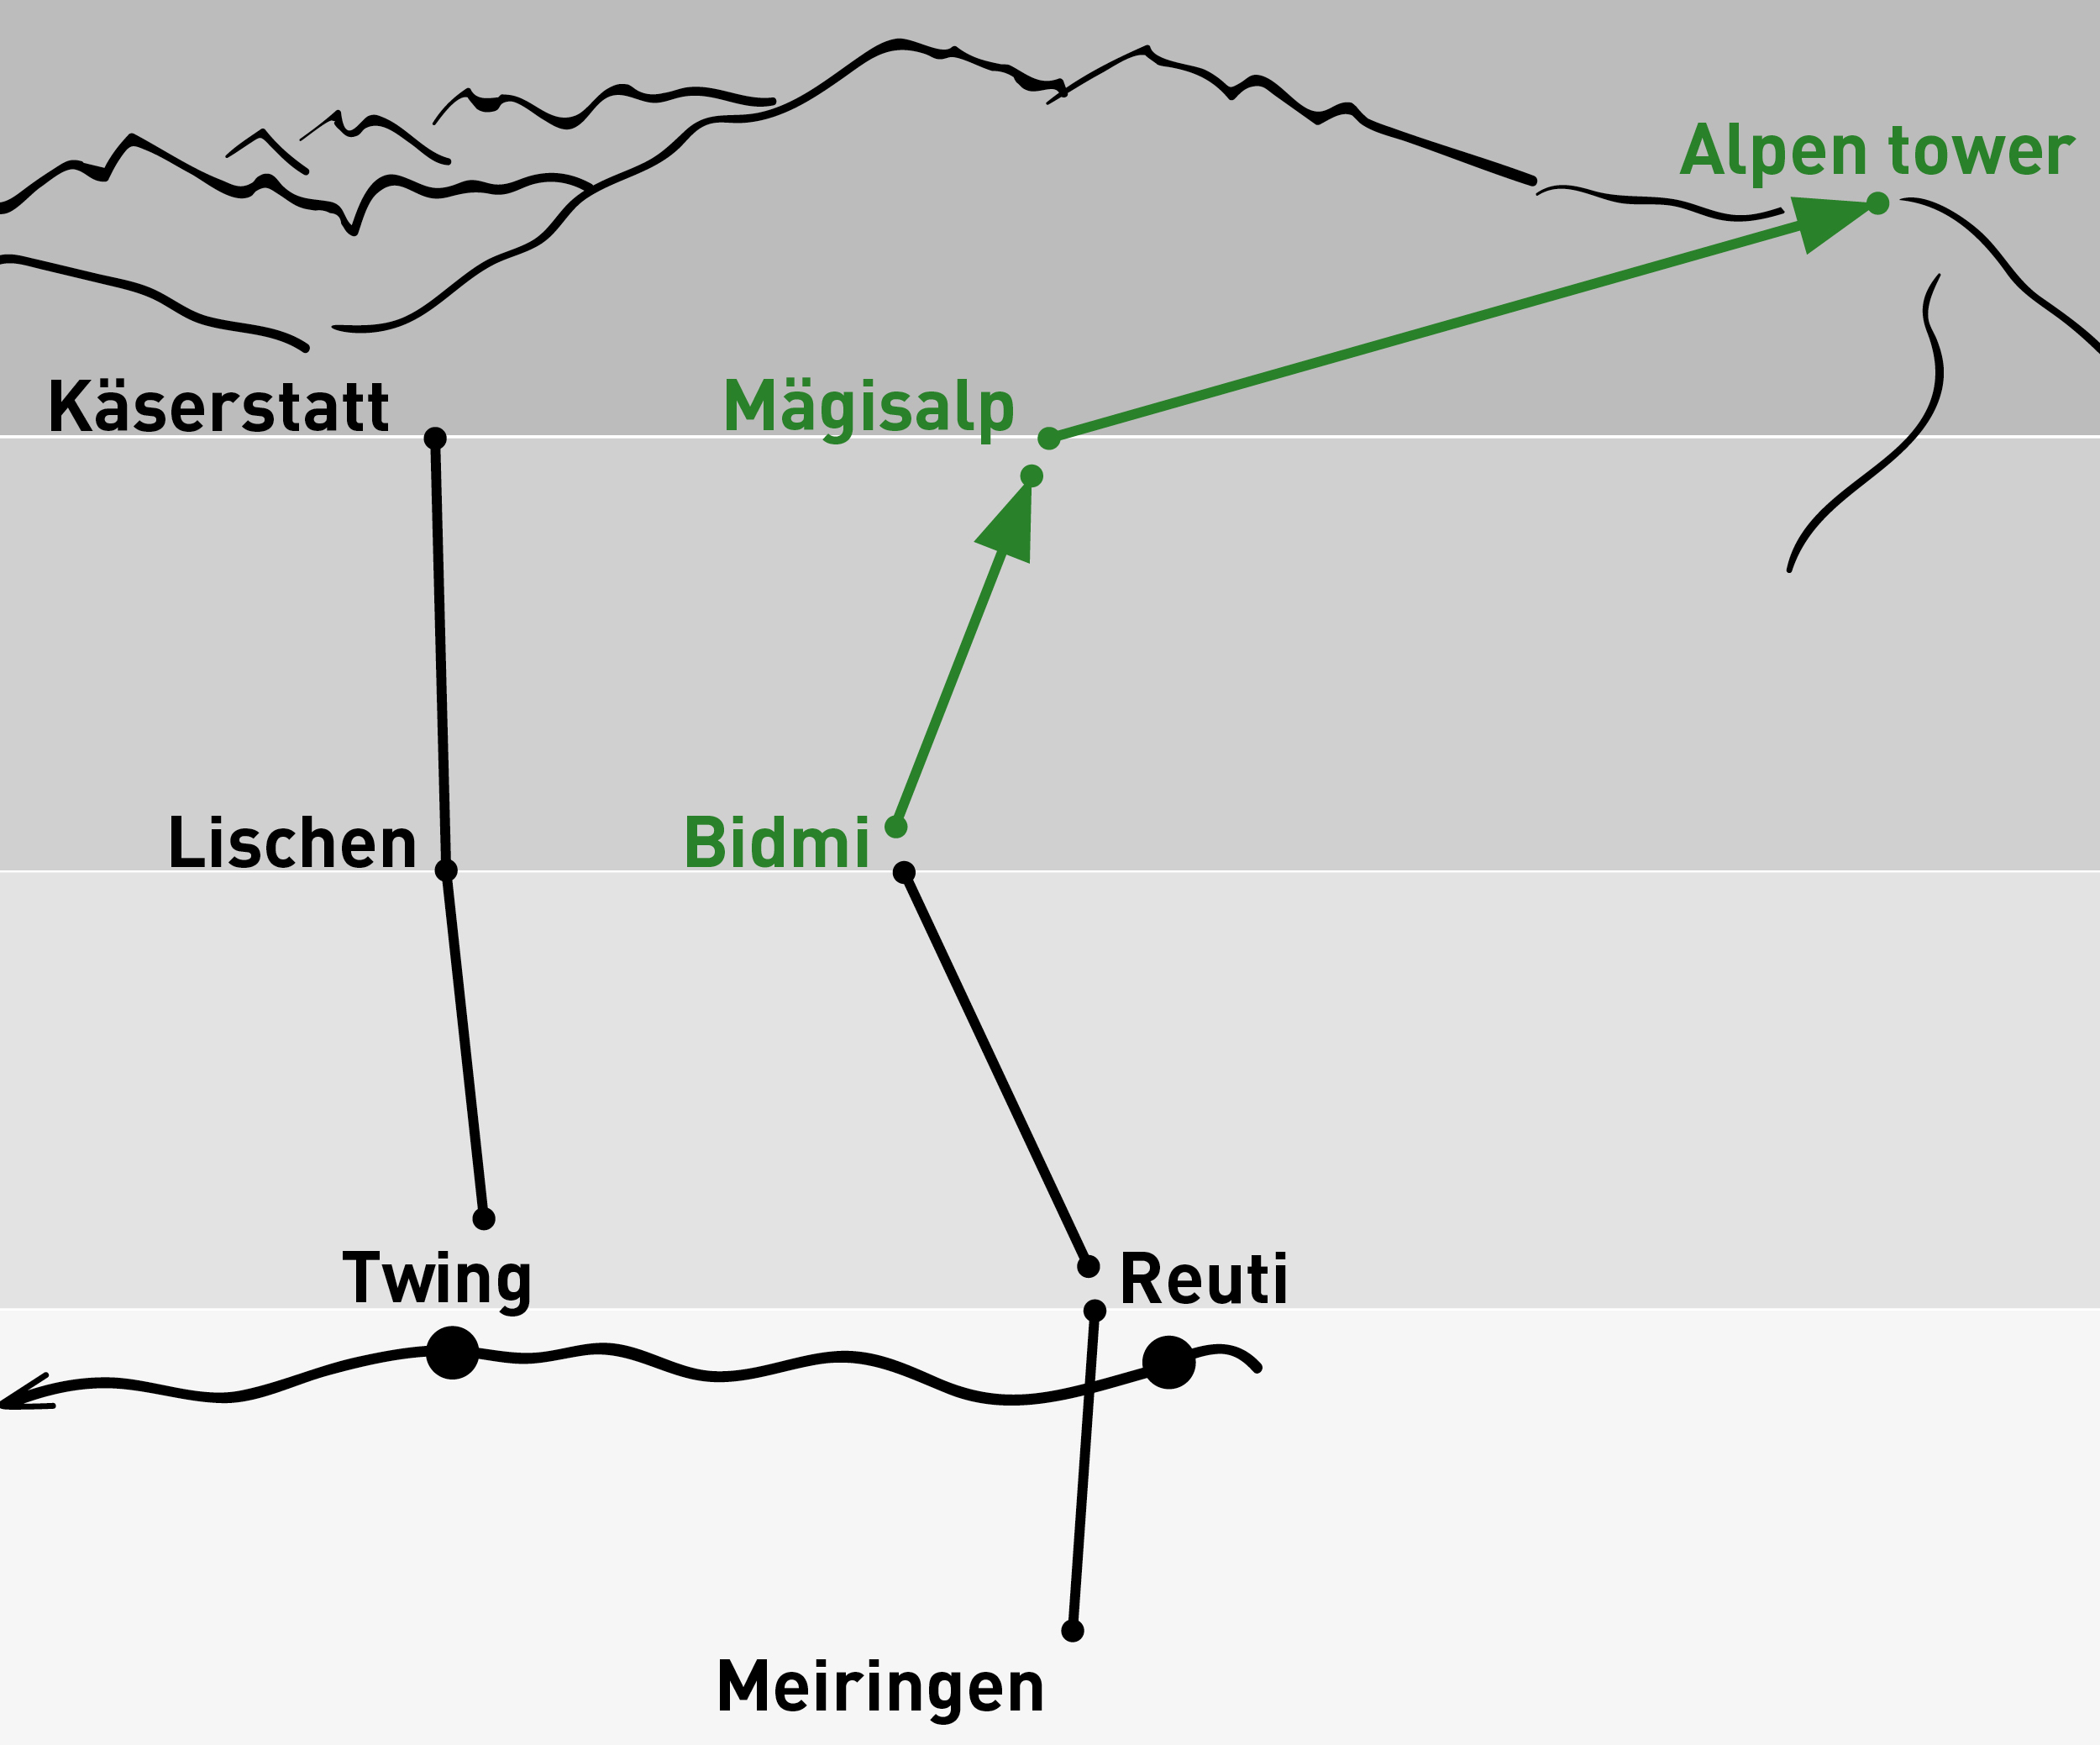 Bidmi - Alpen tower | One-way trip